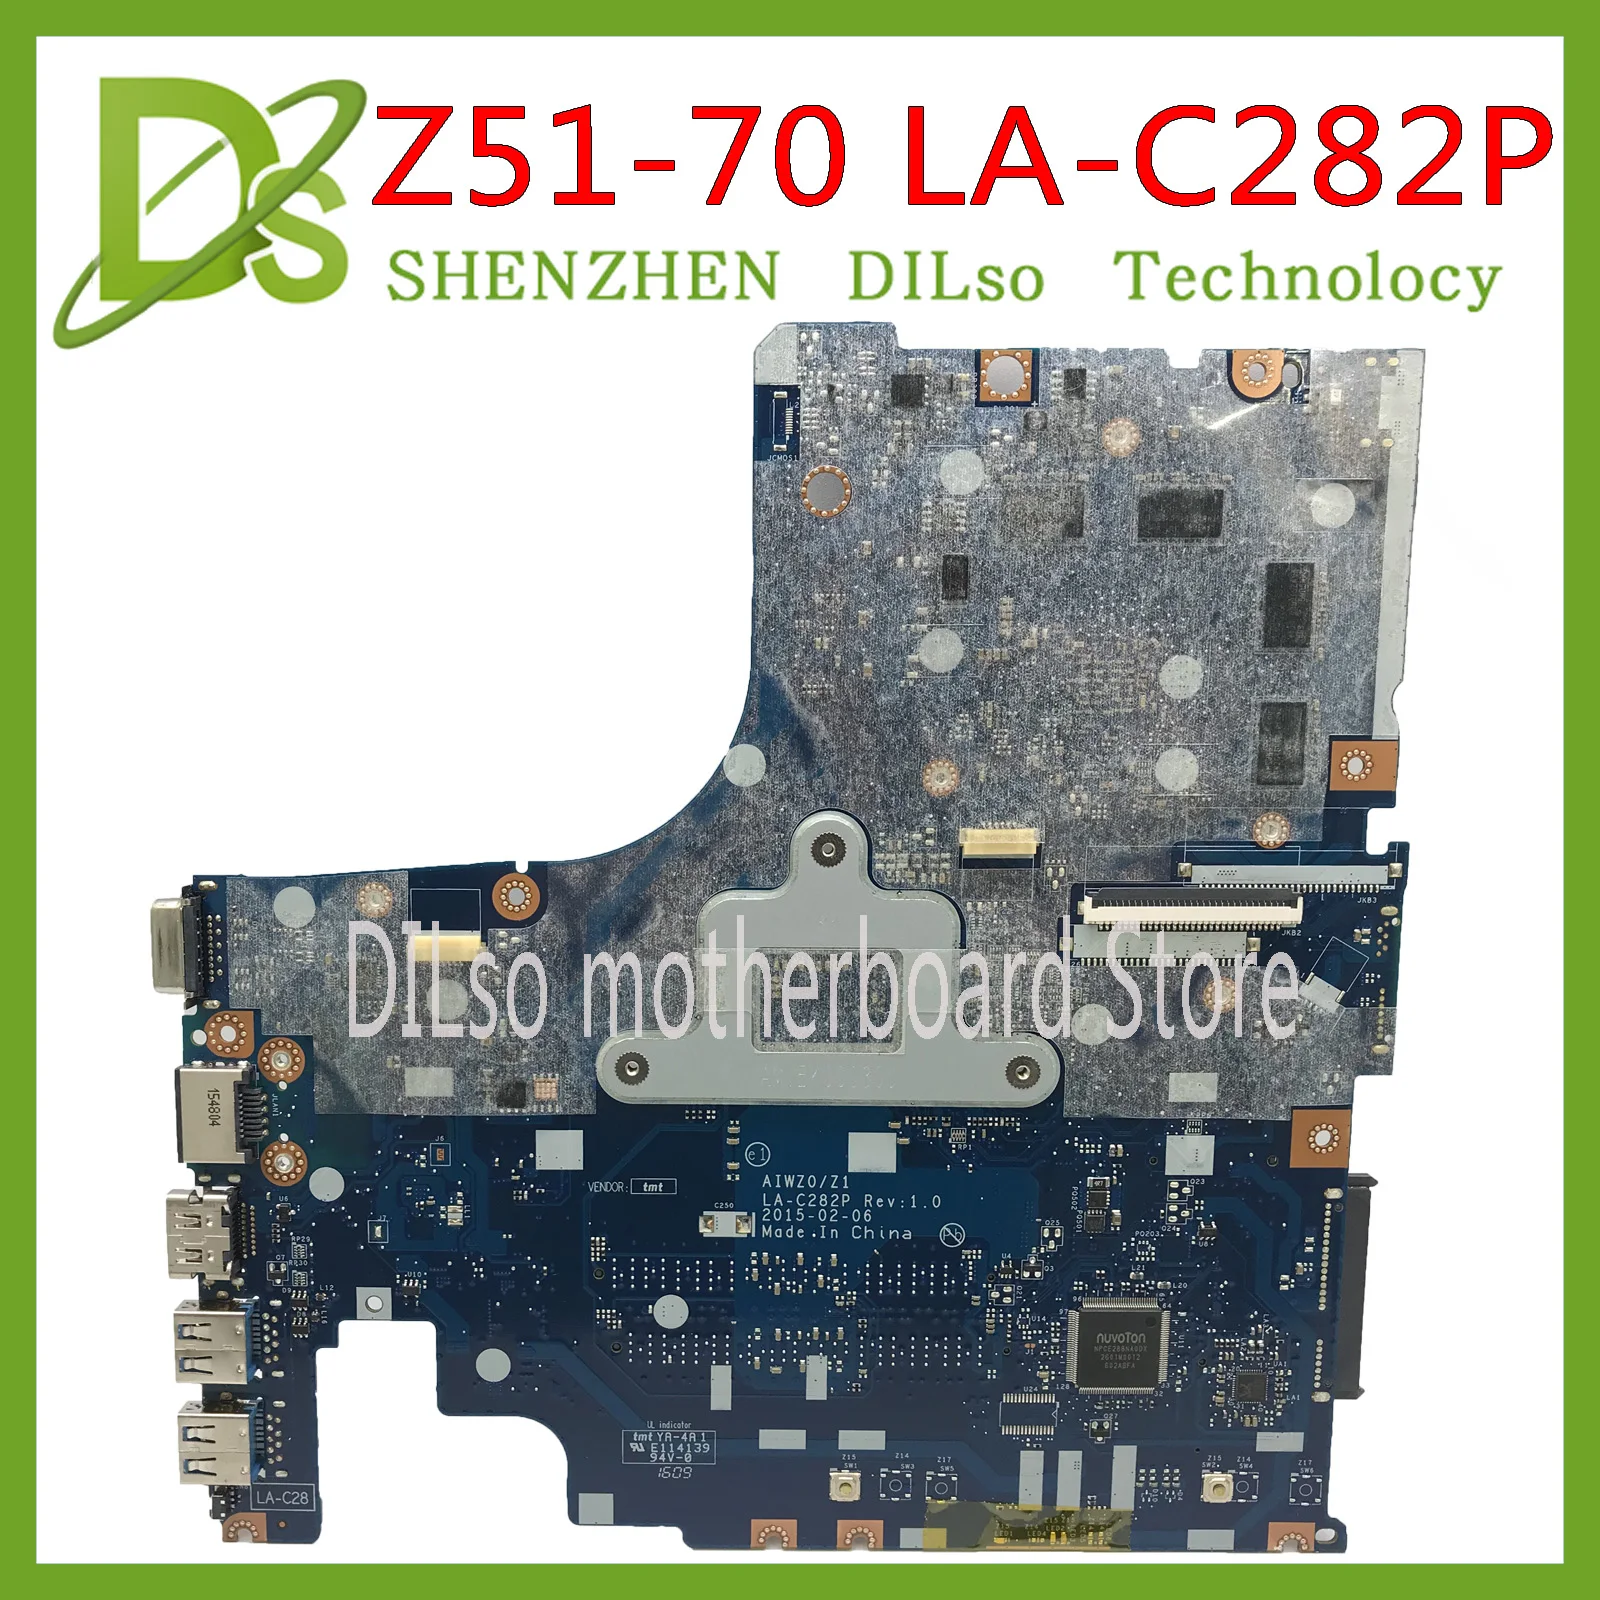 Reviews  KEFU LA-C282P mainboard For Lenovo Notebook Z51-70 AIWZ0/Z1 LA-C282P laptop motherboard I5-5200U R9